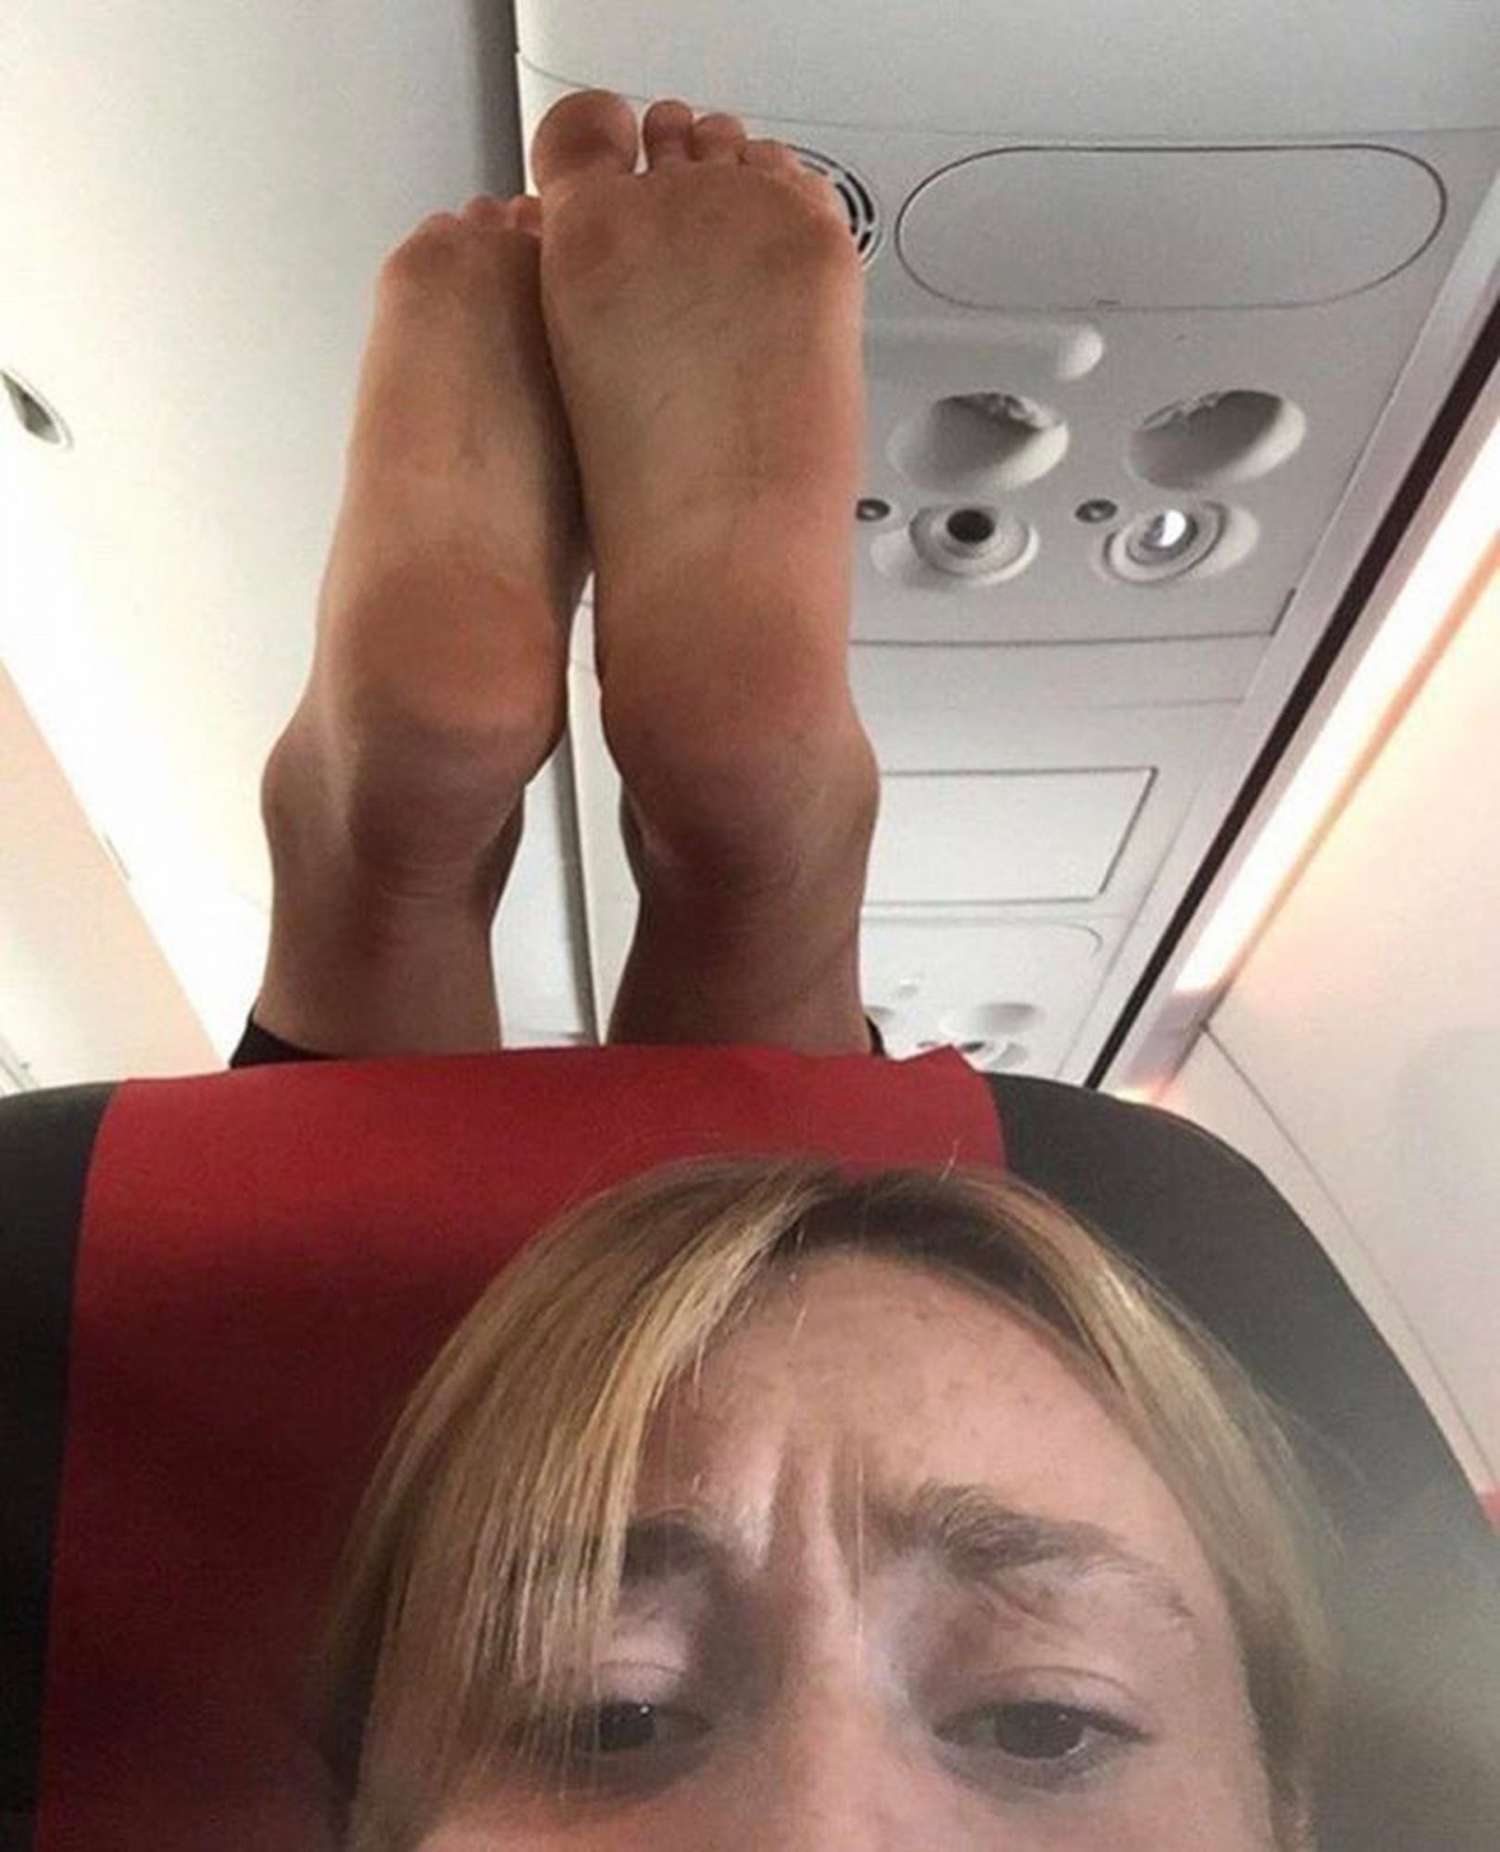 Plane passenger puts feet on headrest